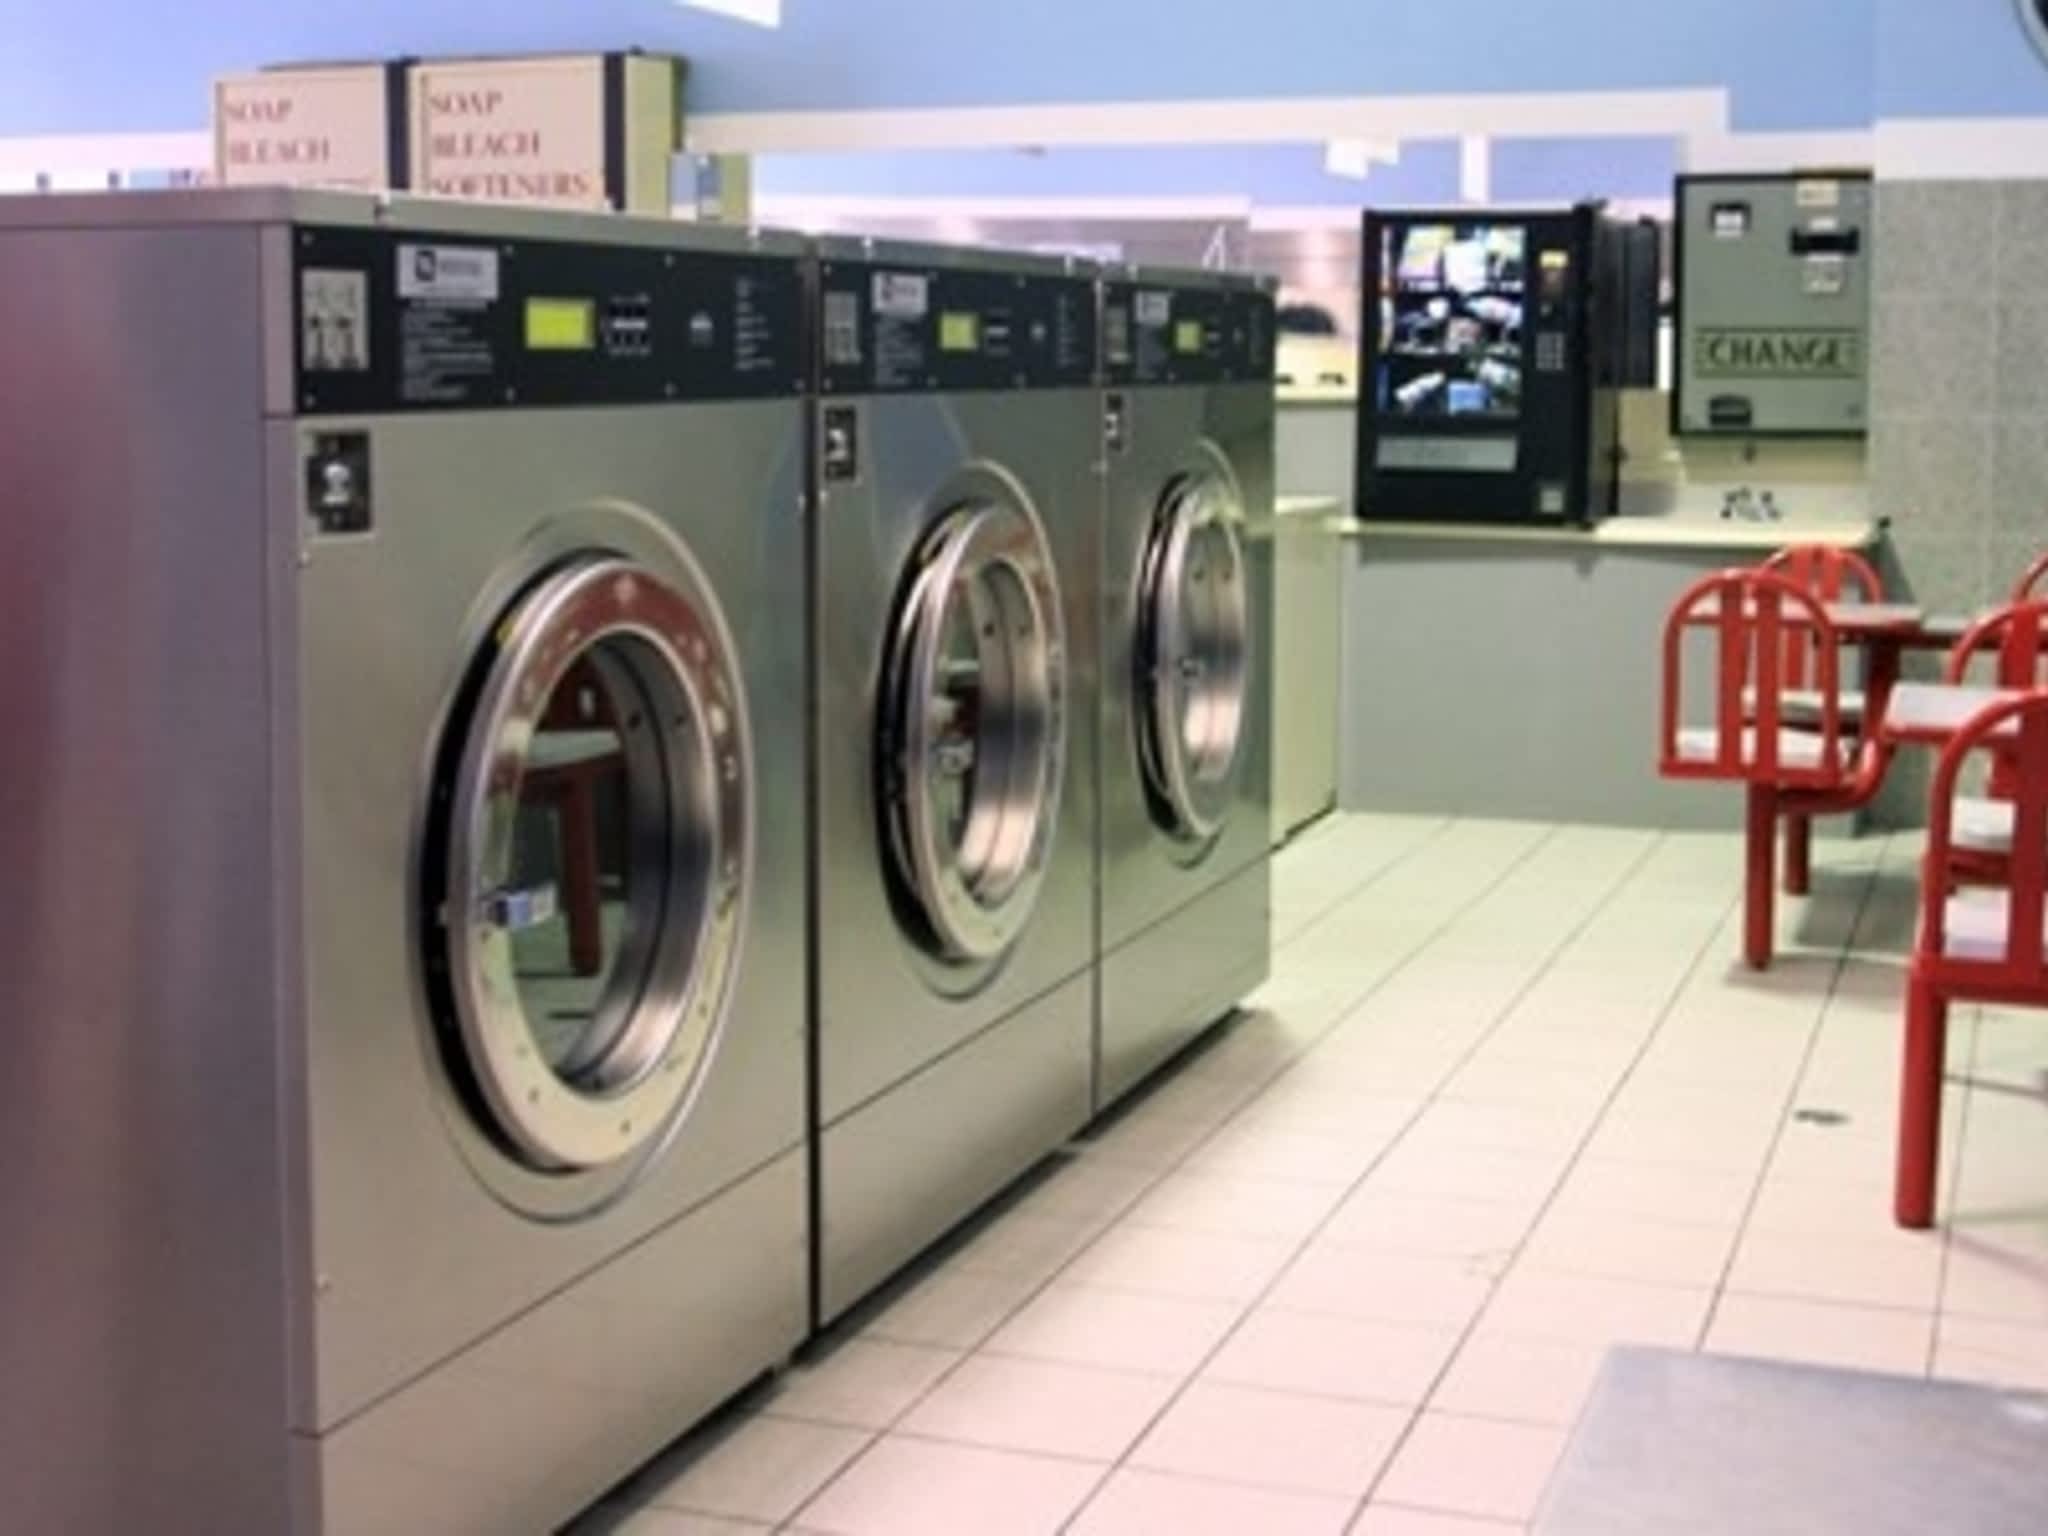 24 hour laundromat near me st